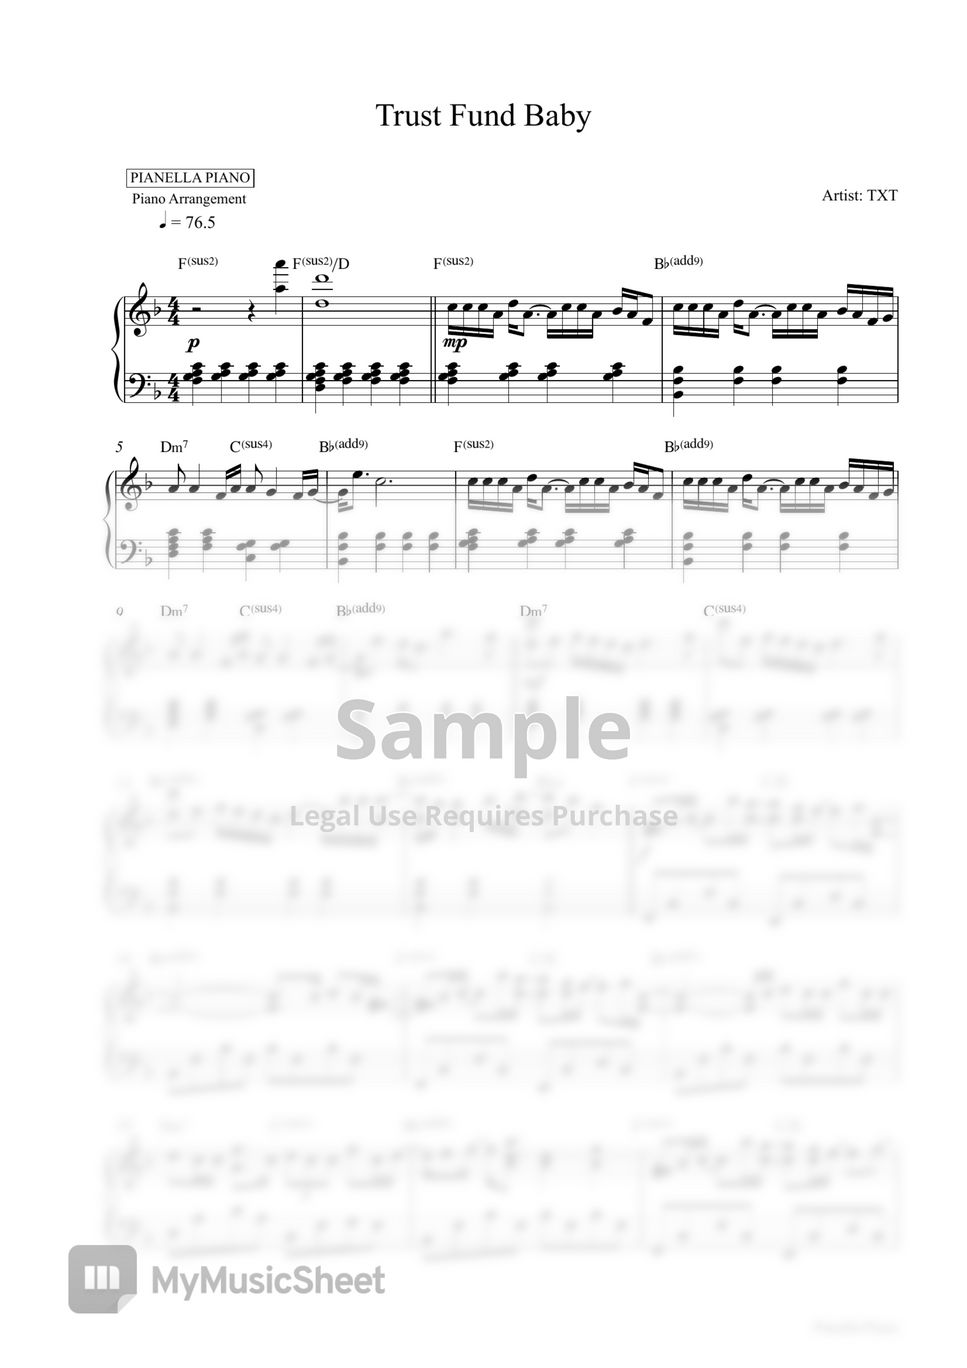 TXT - Trust Fund Baby (Piano Sheet) by Pianella Piano